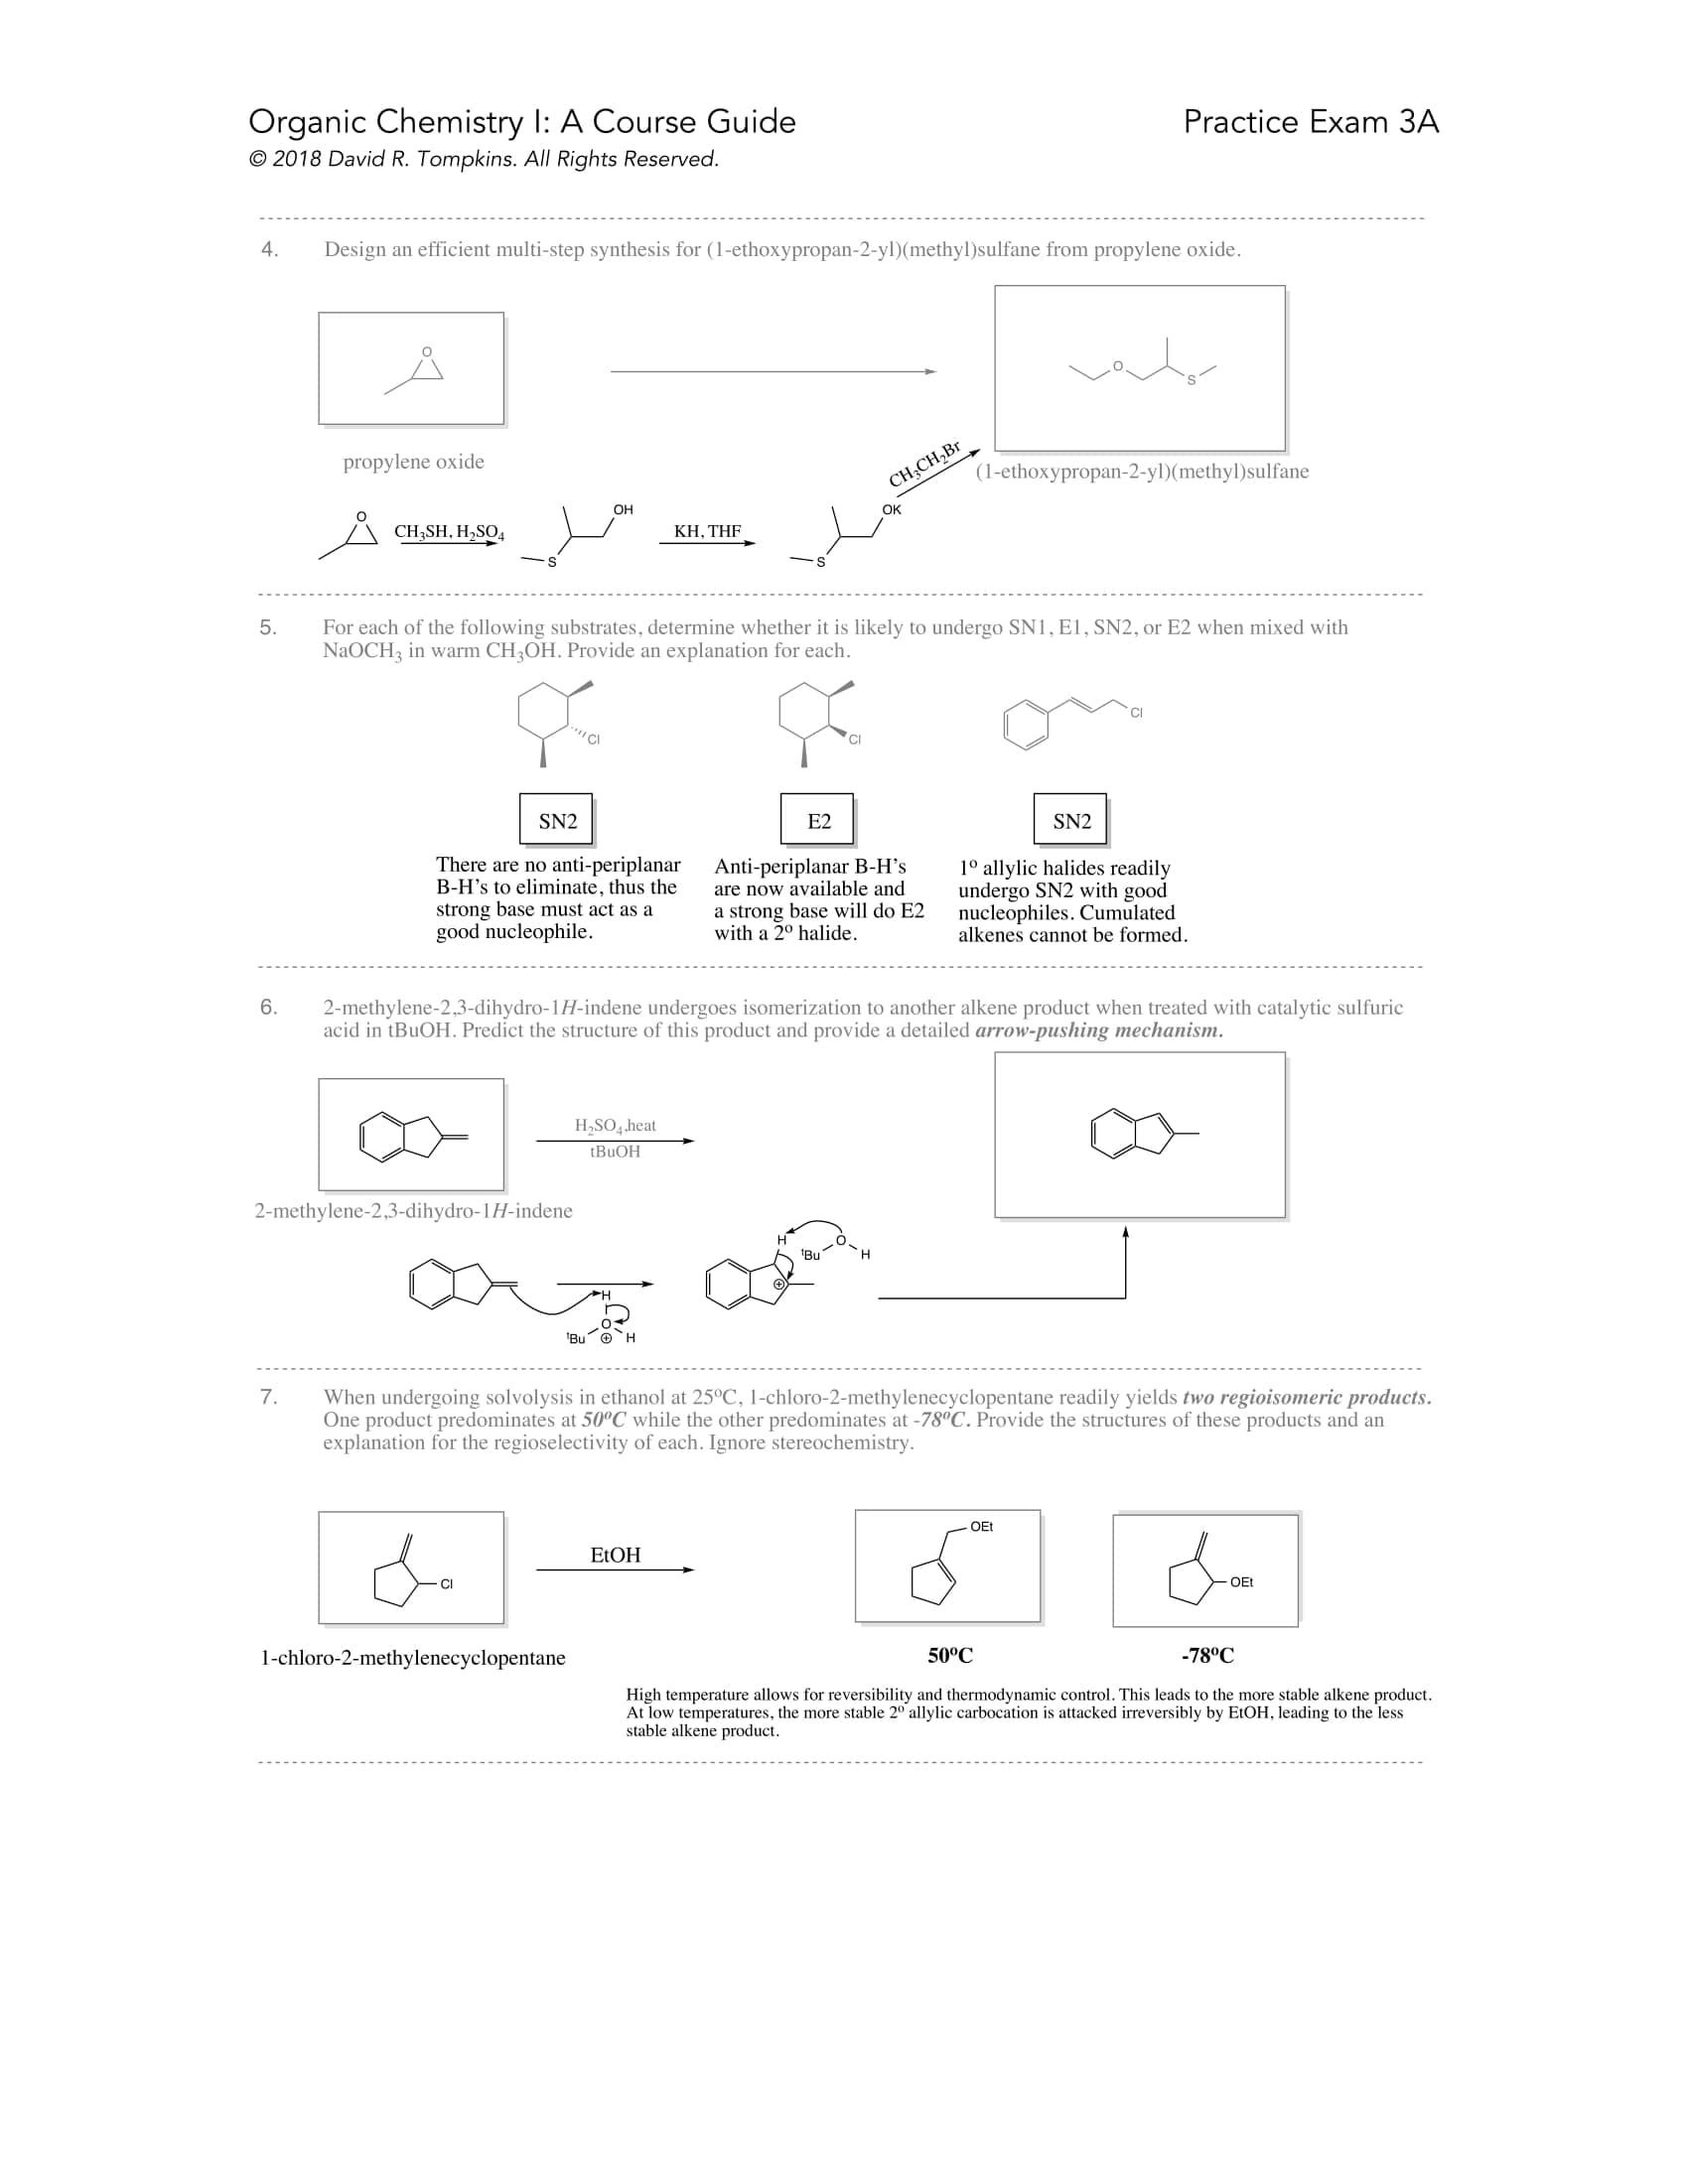 Beyond Labz Organic Chemistry Answer Key Read online hp color laserjet 3600n service manual